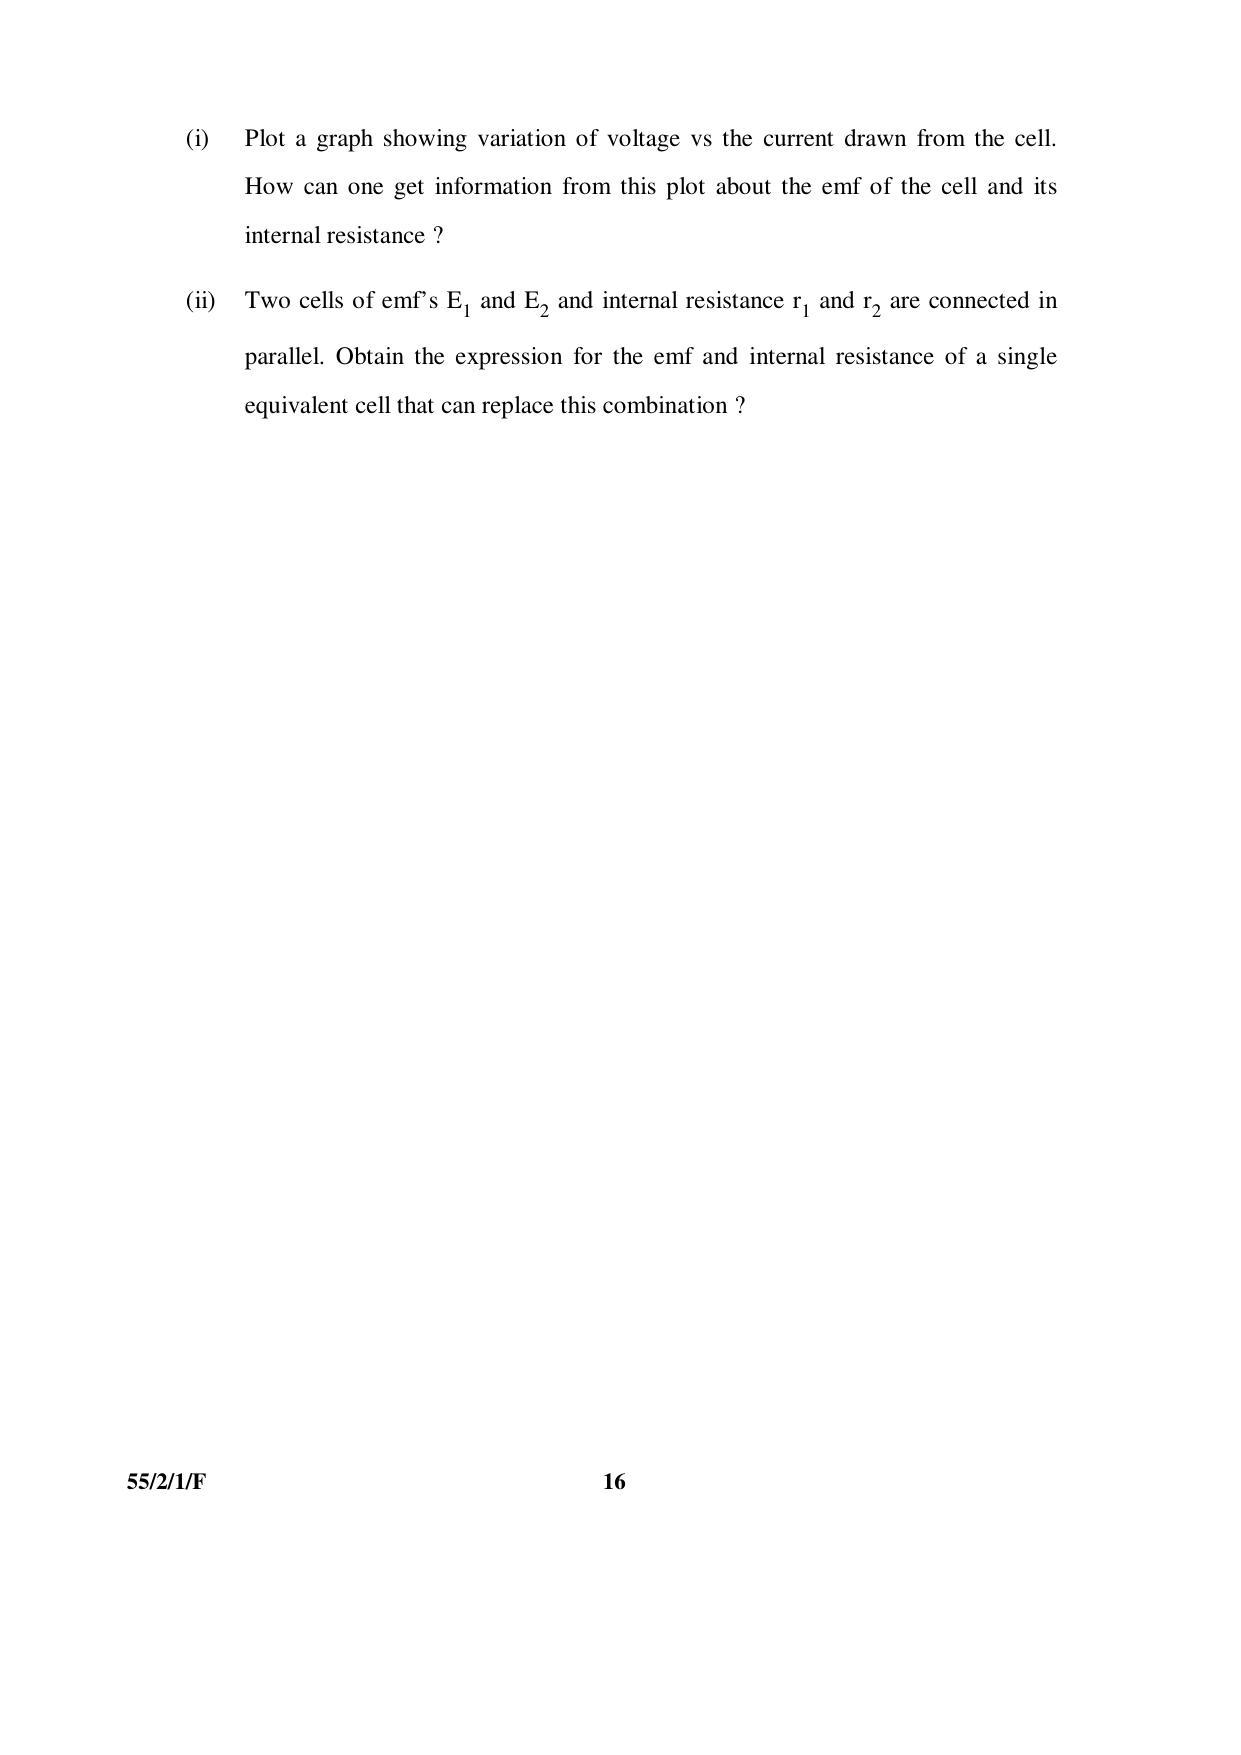 CBSE Class 12 55-2-1-F _Physics_SET-1 2016 Question Paper - Page 16